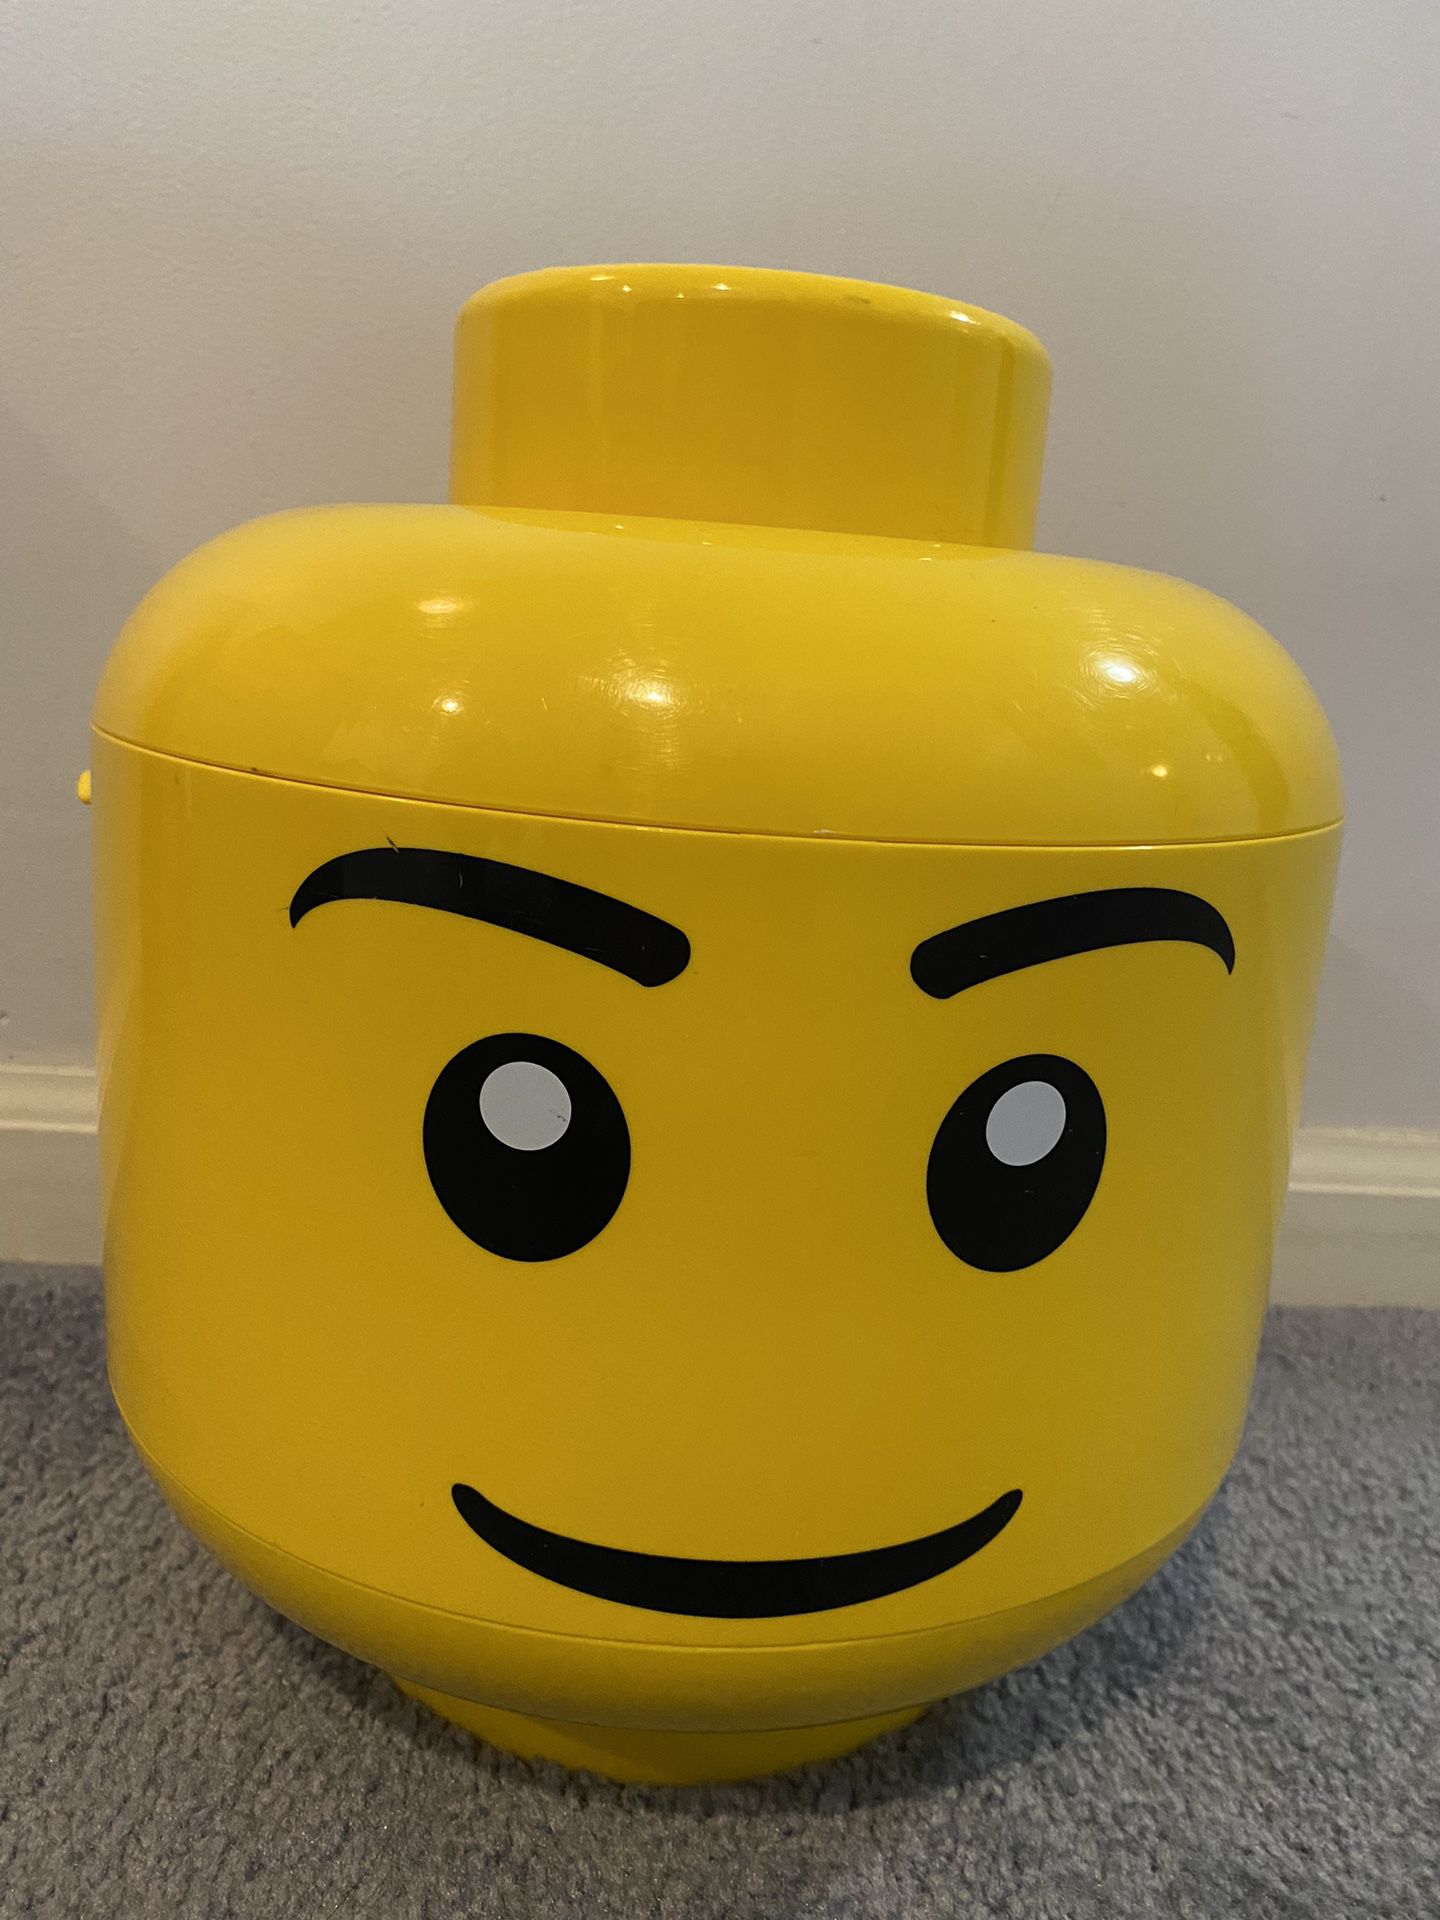 Big  Lego head storage and sort case with handle.